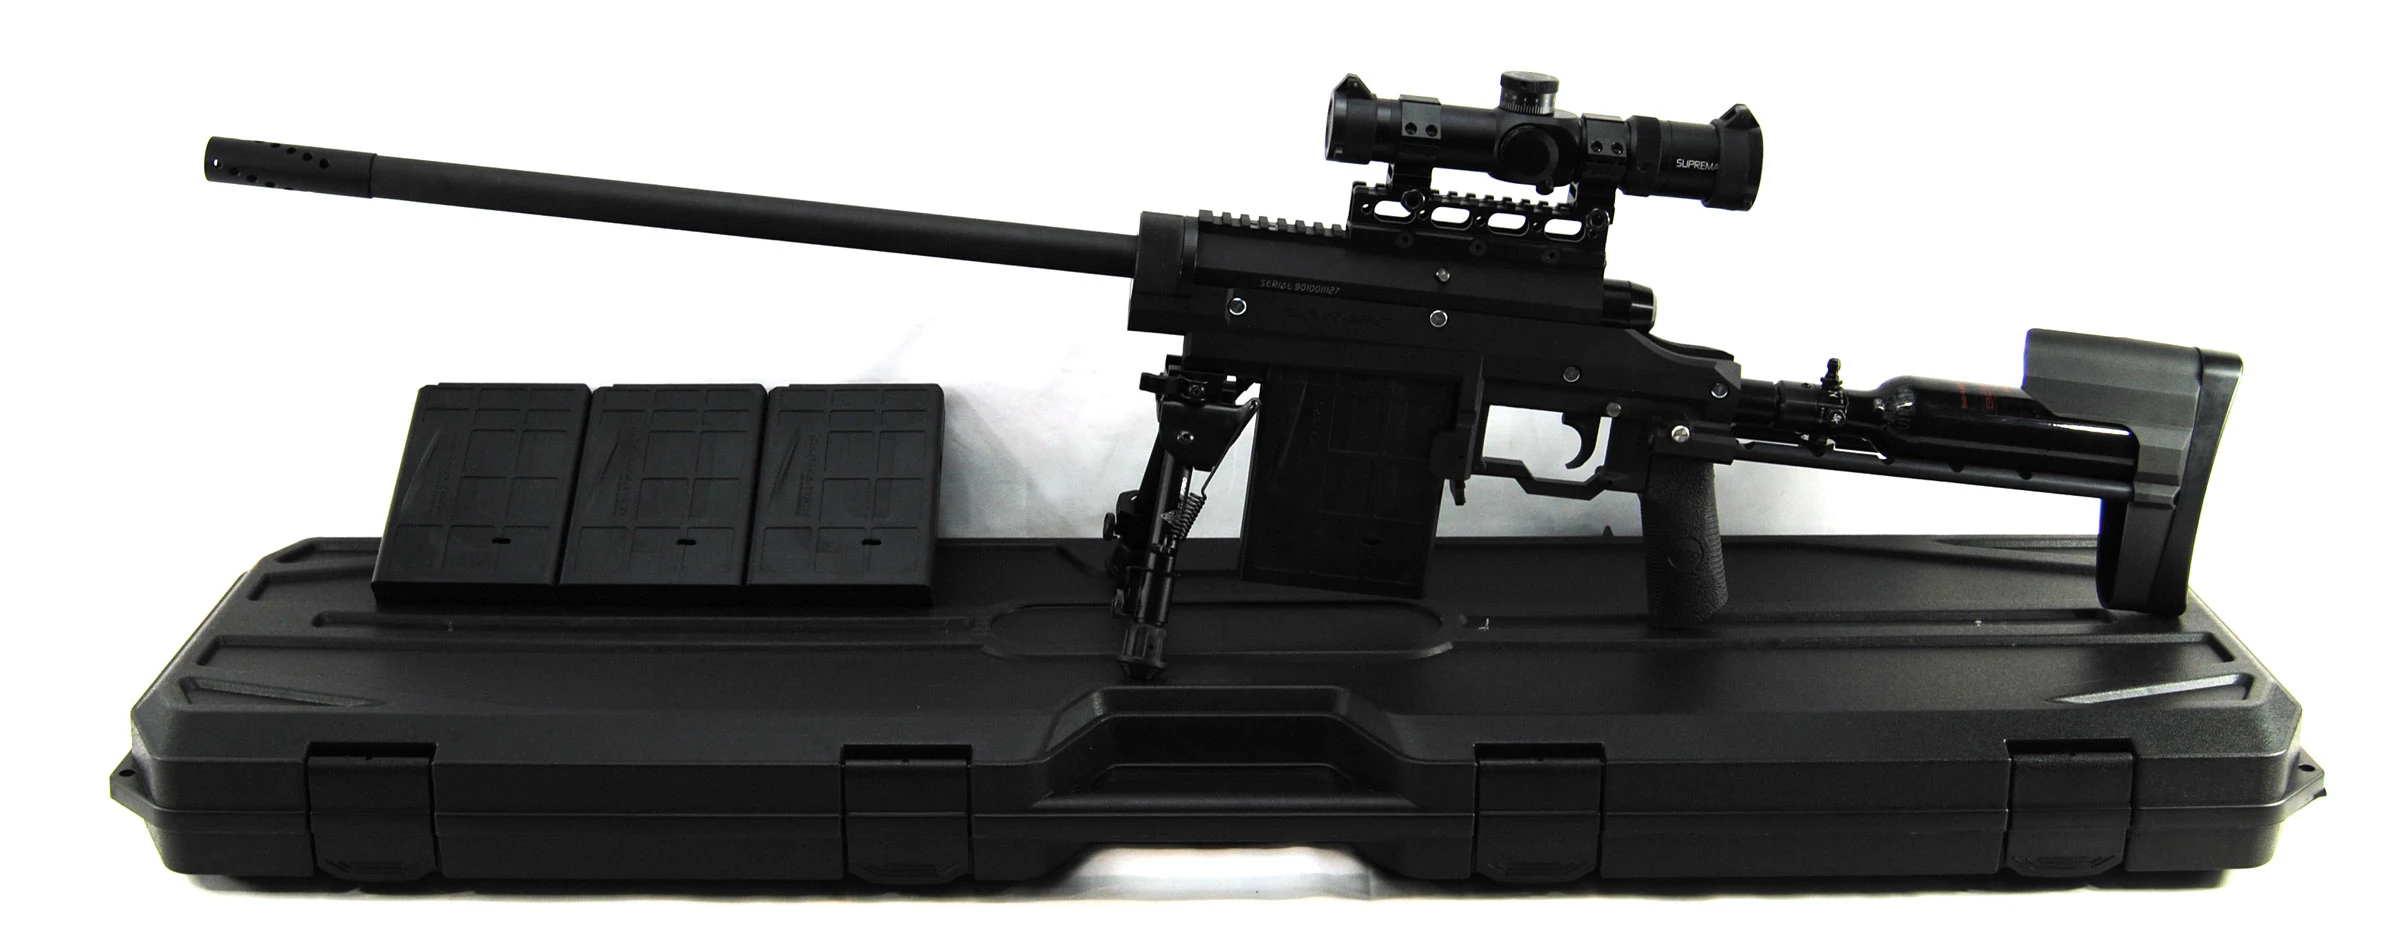 Carmatech SAR12C Sniper Rifle Kit